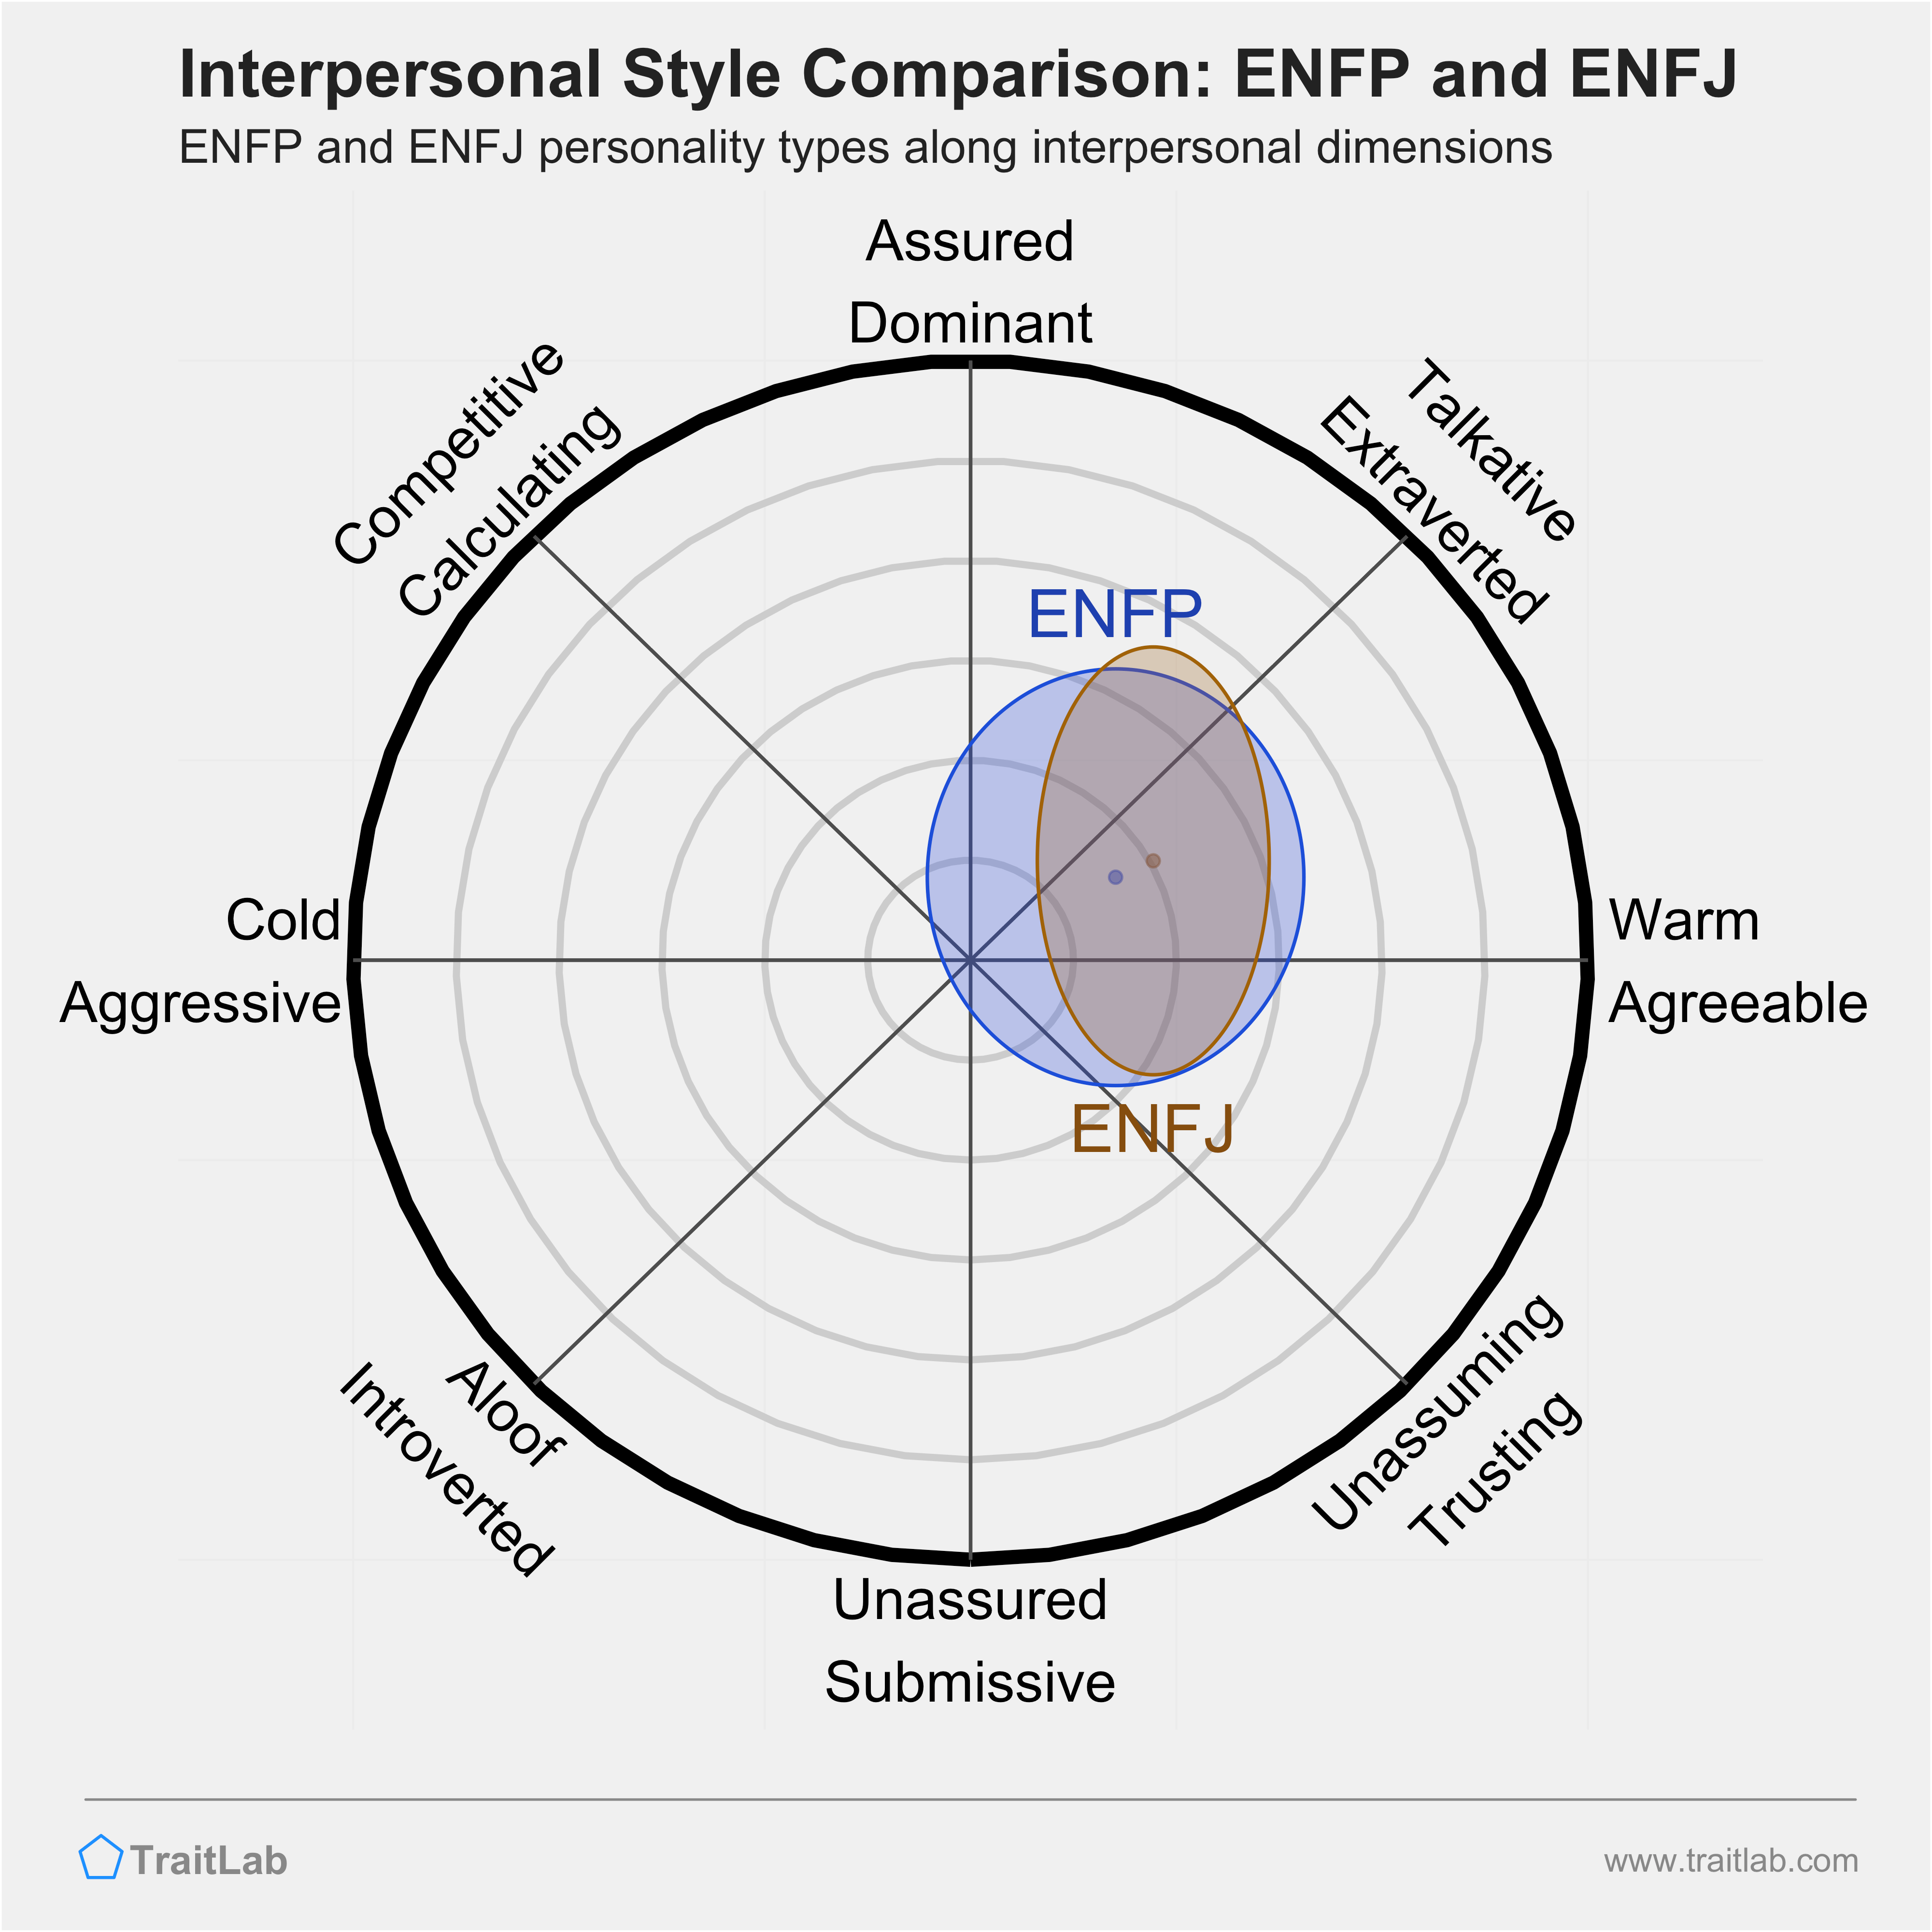 ENFP and ENFJ comparison across interpersonal dimensions